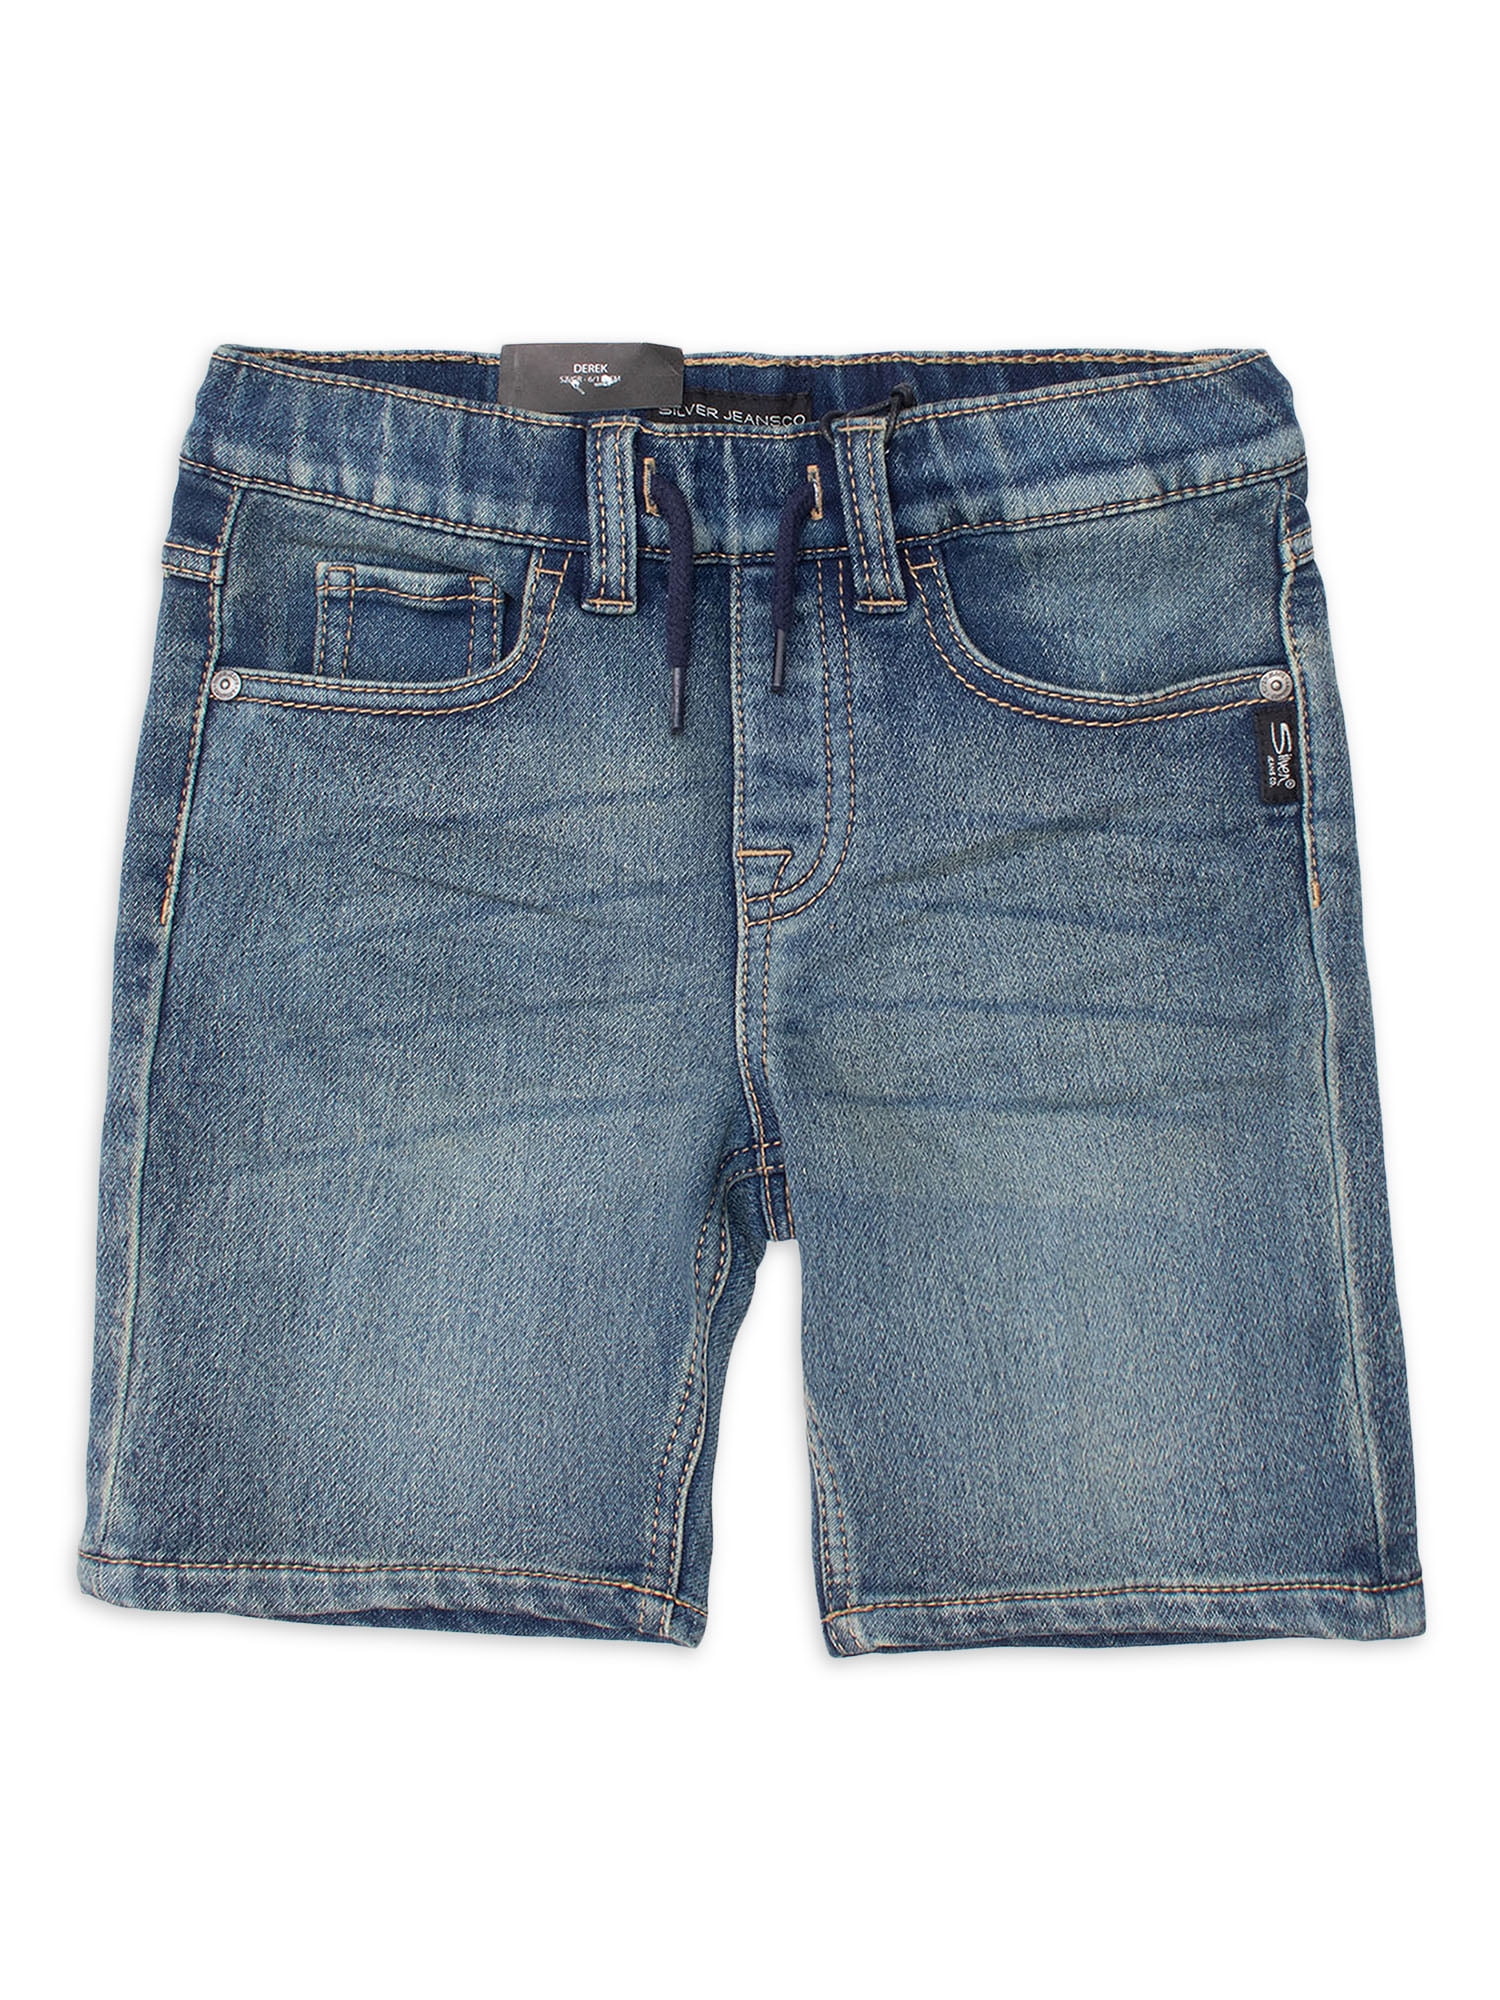 Silver Jeans Co. Boys Knit Denim Pull-On Shorts, Sizes 4-16 - Walmart.com